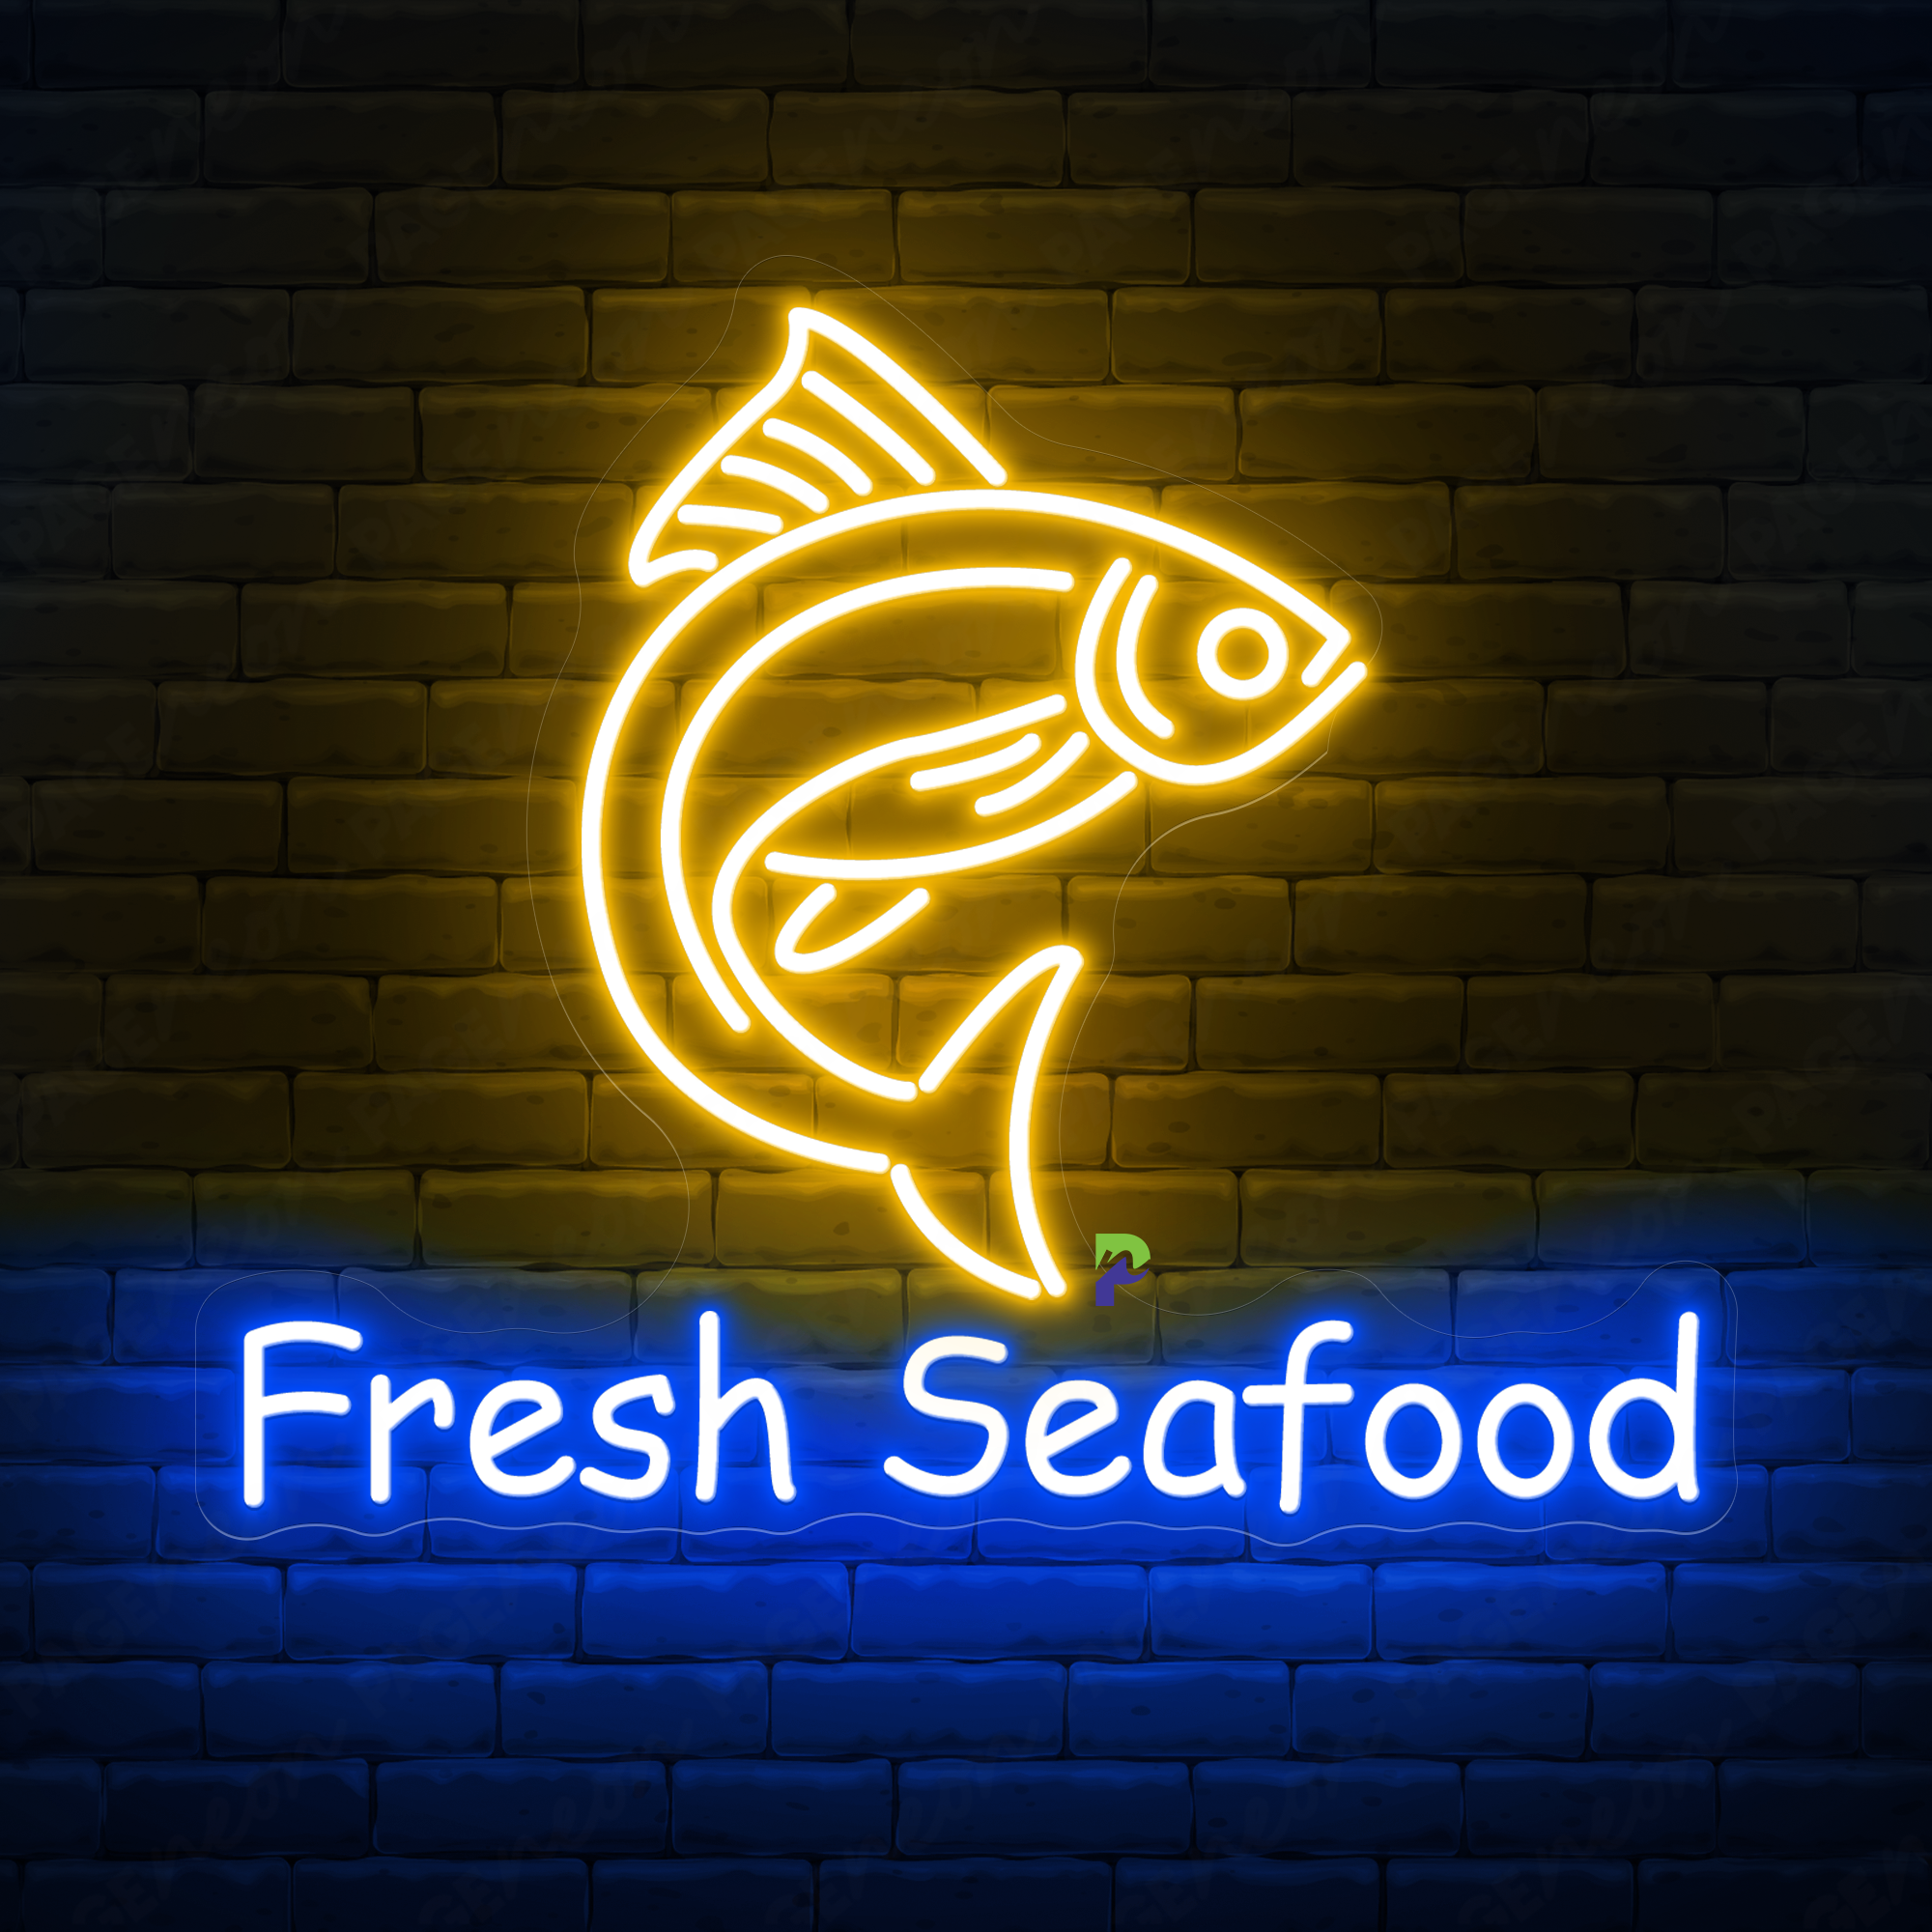 Fresh Seafood Neon Sign Led Light For Restaurant